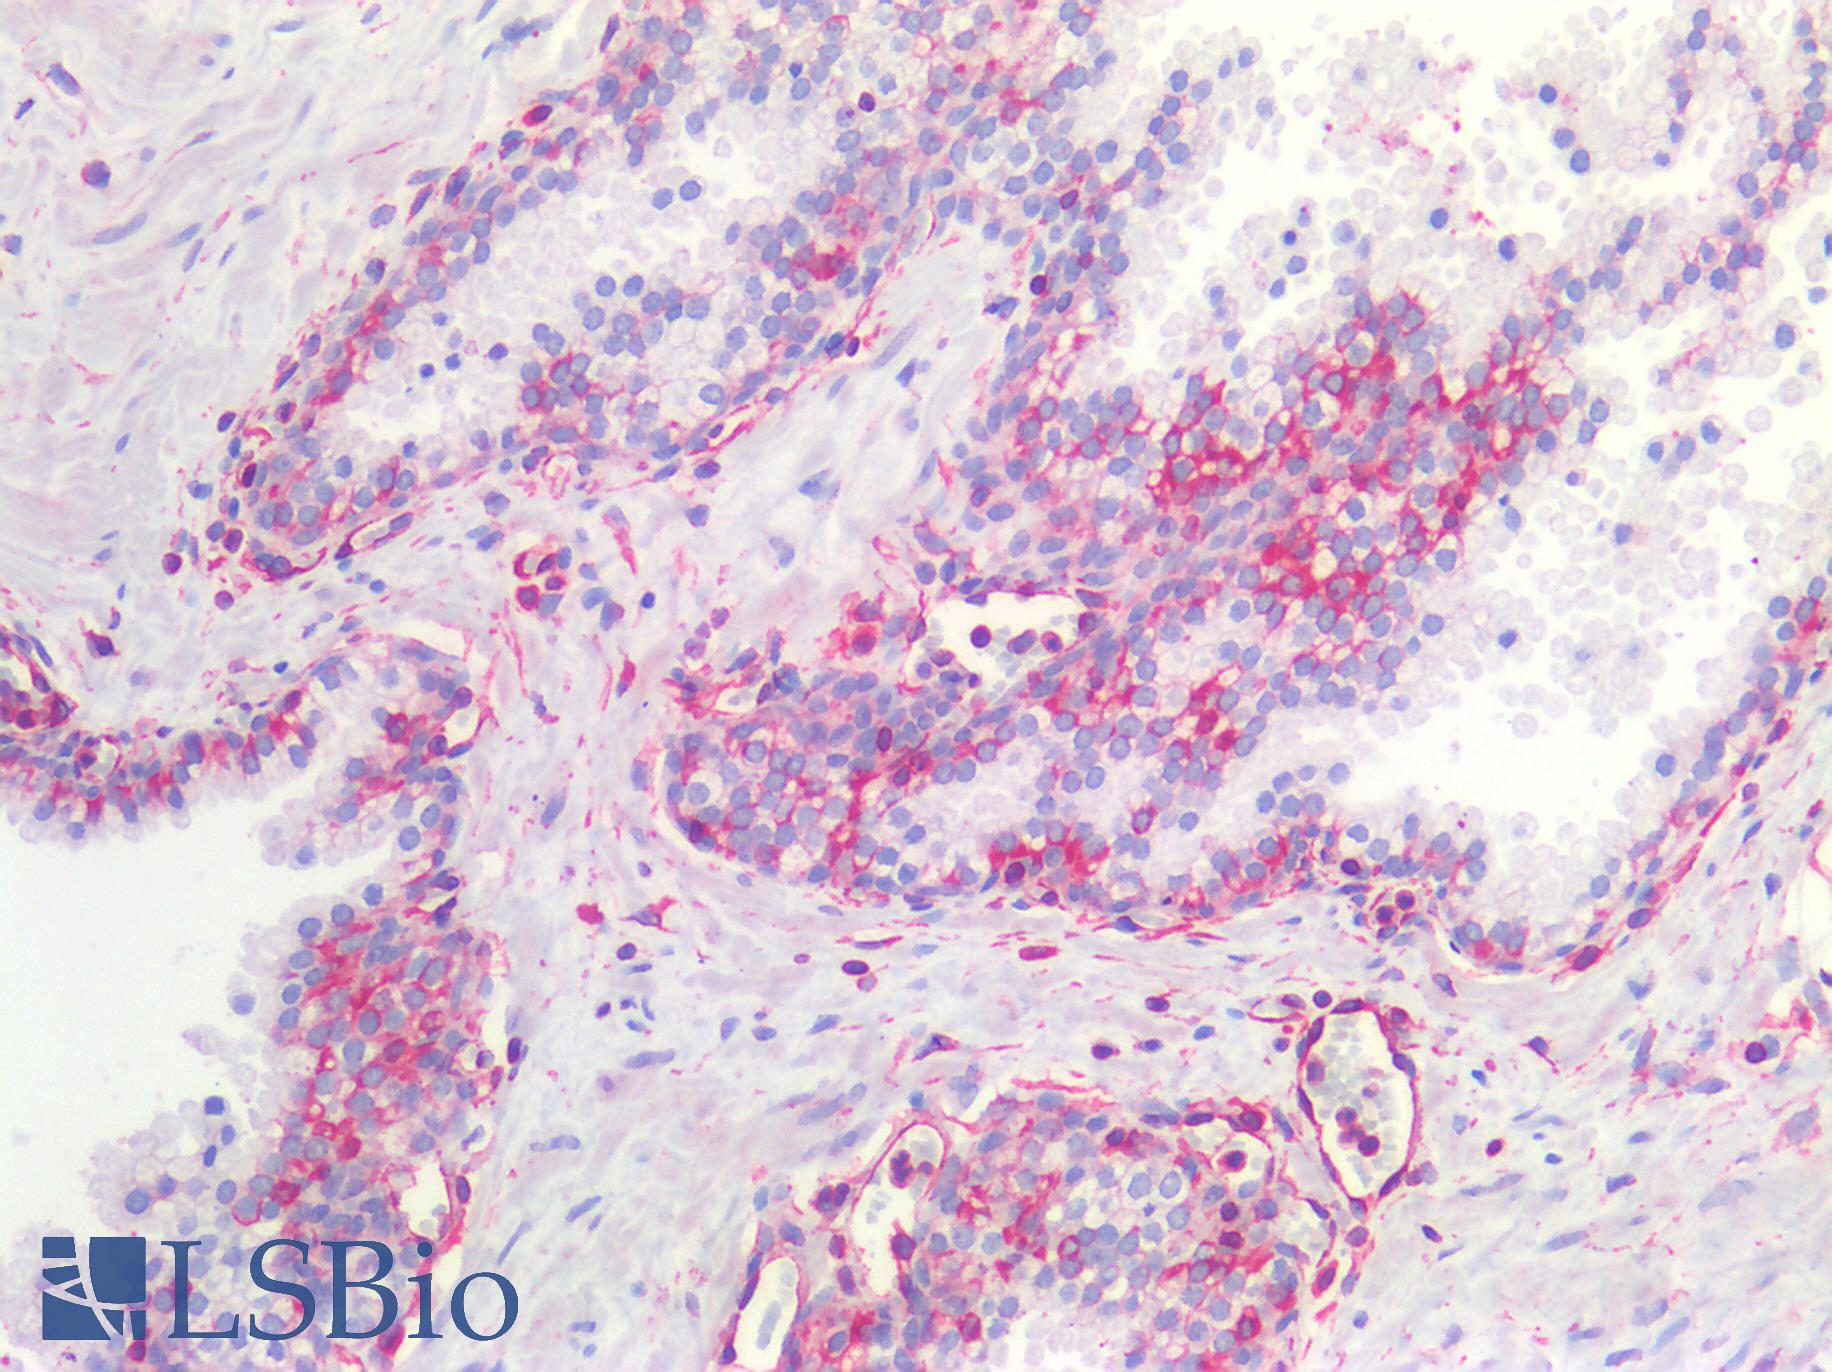 NOS2 / iNOS Antibody - Human Prostate: Formalin-Fixed, Paraffin-Embedded (FFPE)